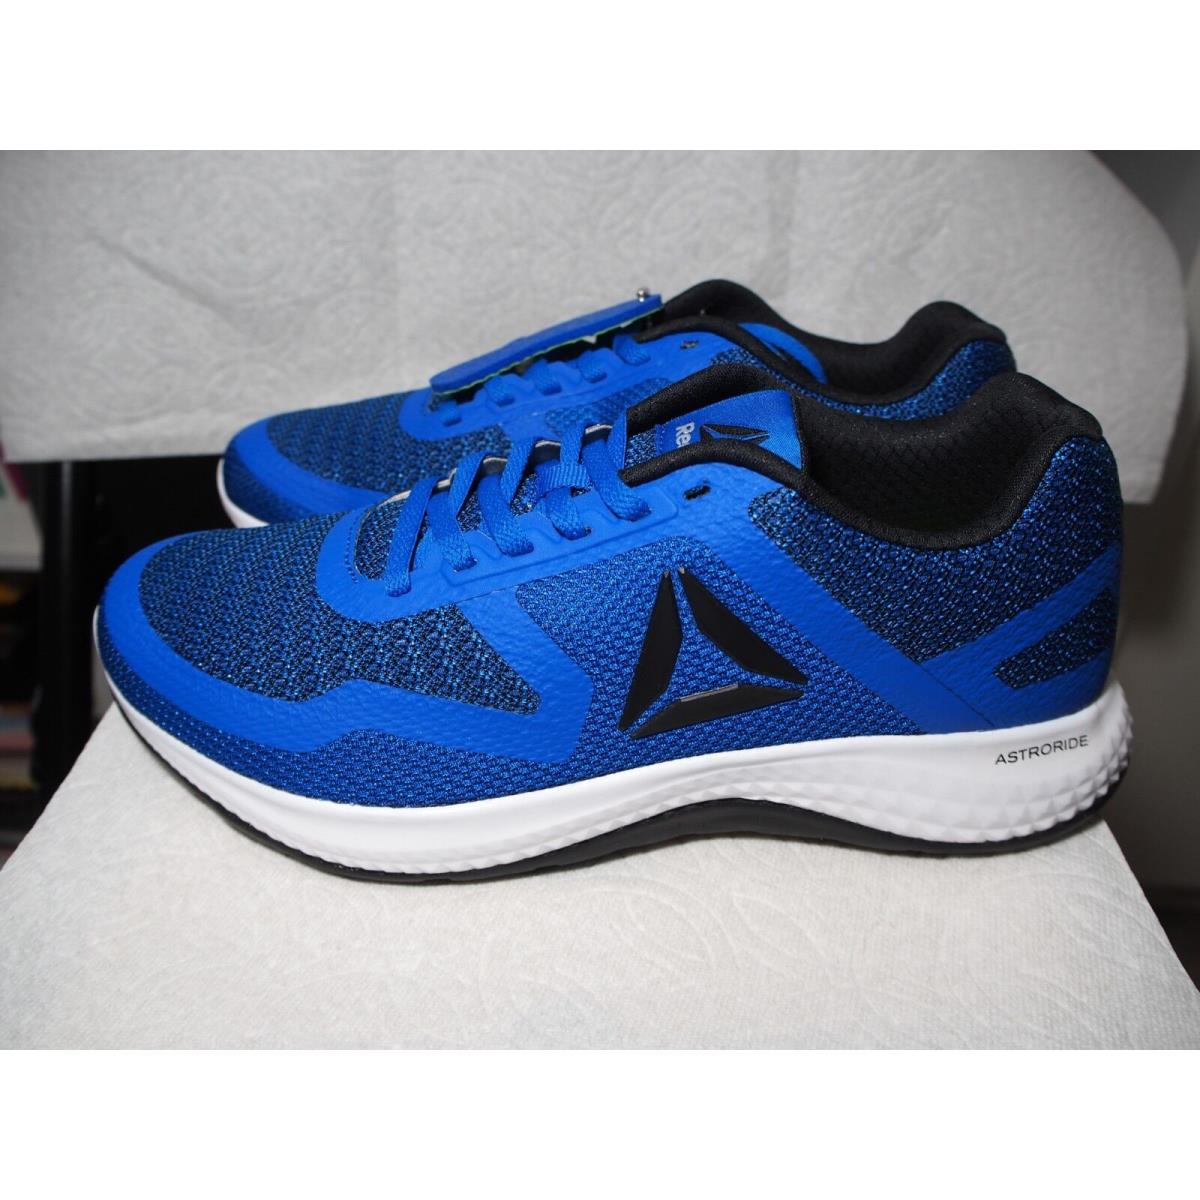 Reebok BD2283 Mens Astroride Duo Running Walking Shoes Sneakers Blue Size 8